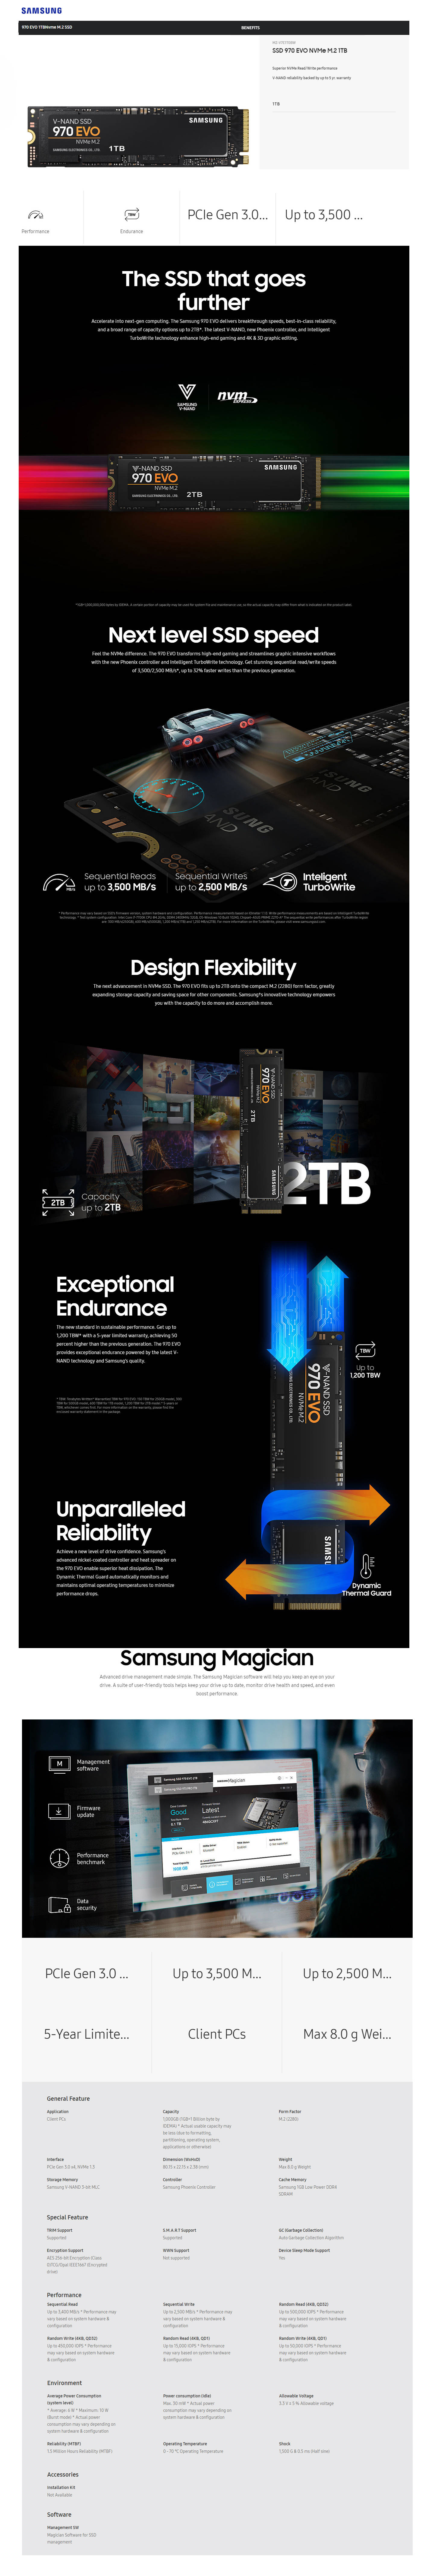  Buy Online Samsung 970 EVO 1TB NVMe M.2 Internal Solid State Drive (MZ-V7E1T0BW)